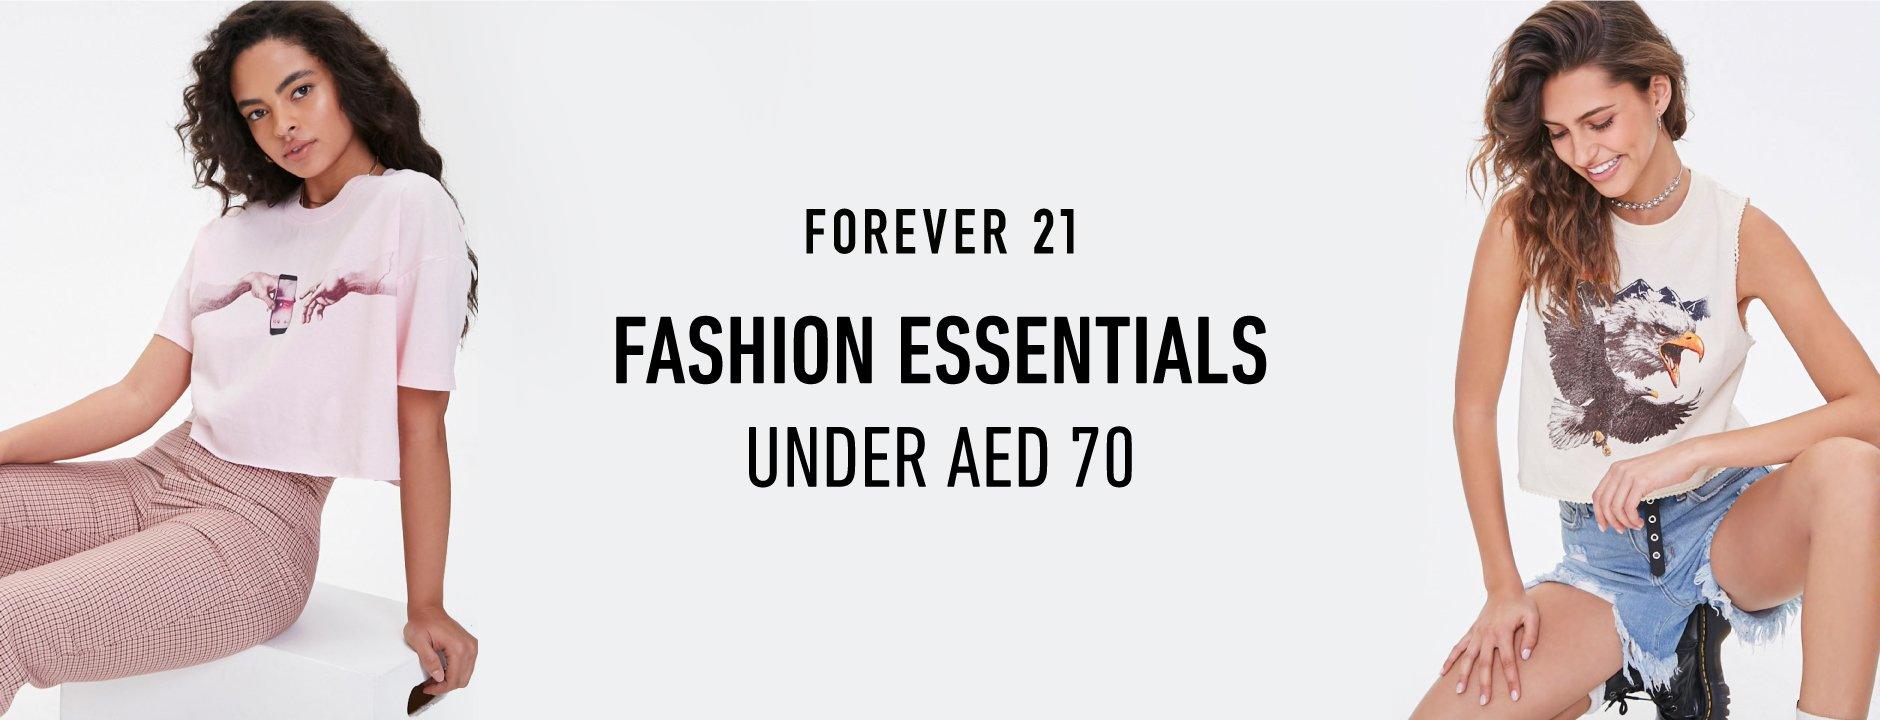 Forever 21 Fashion Essentials Under AED 70 - Forever 21 UAE